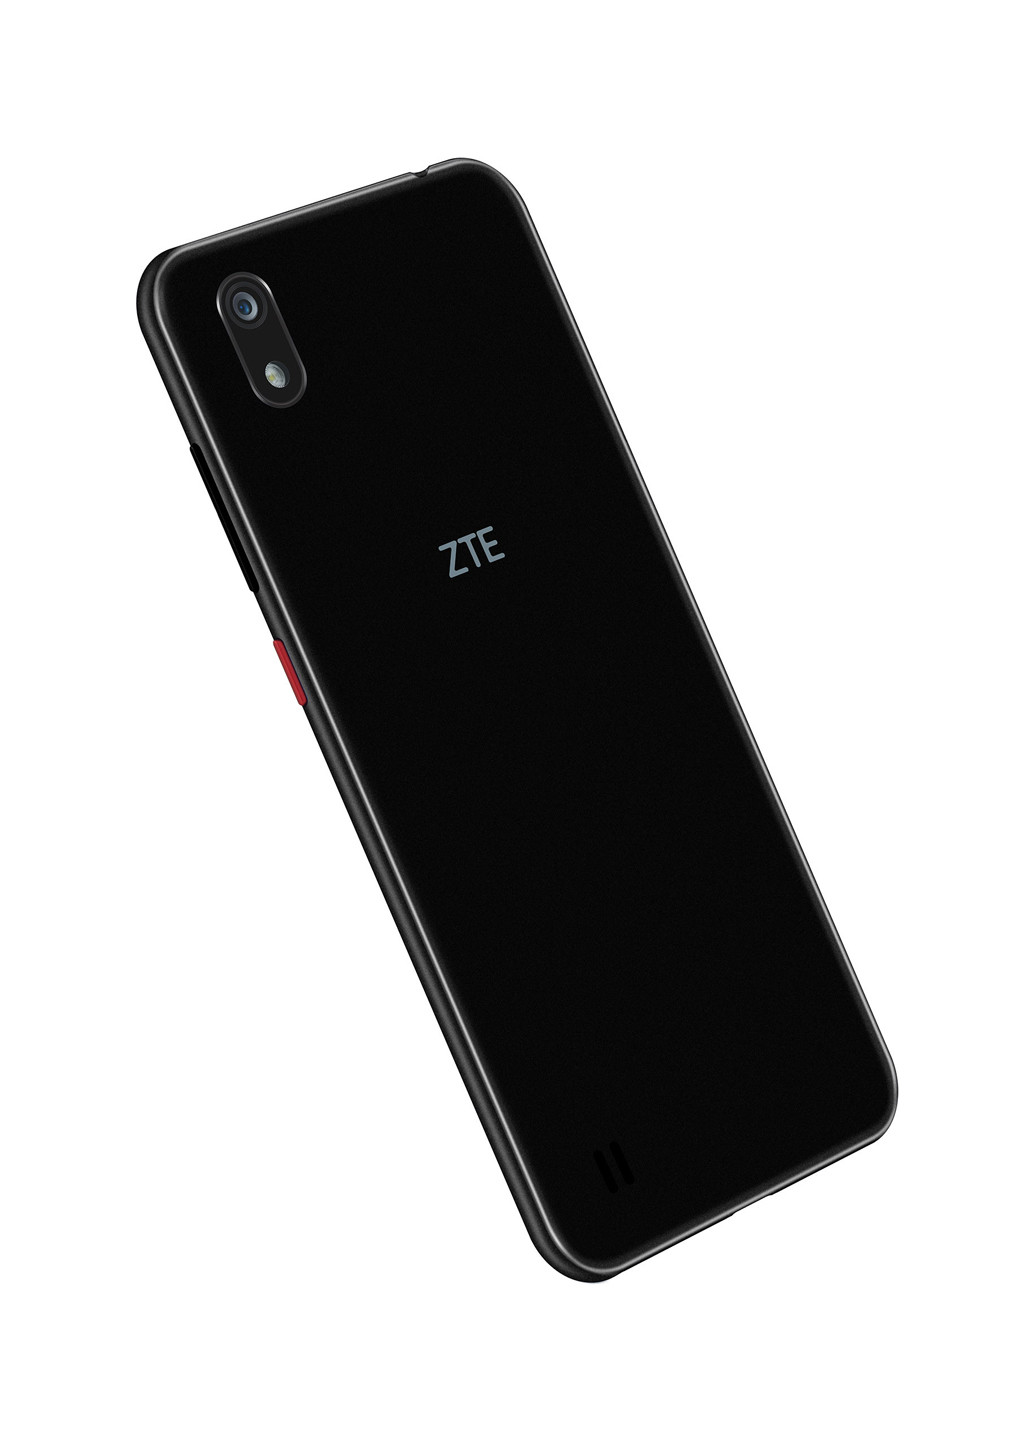 Смартфон ZTE blade a7 2/32gb black (135037816)